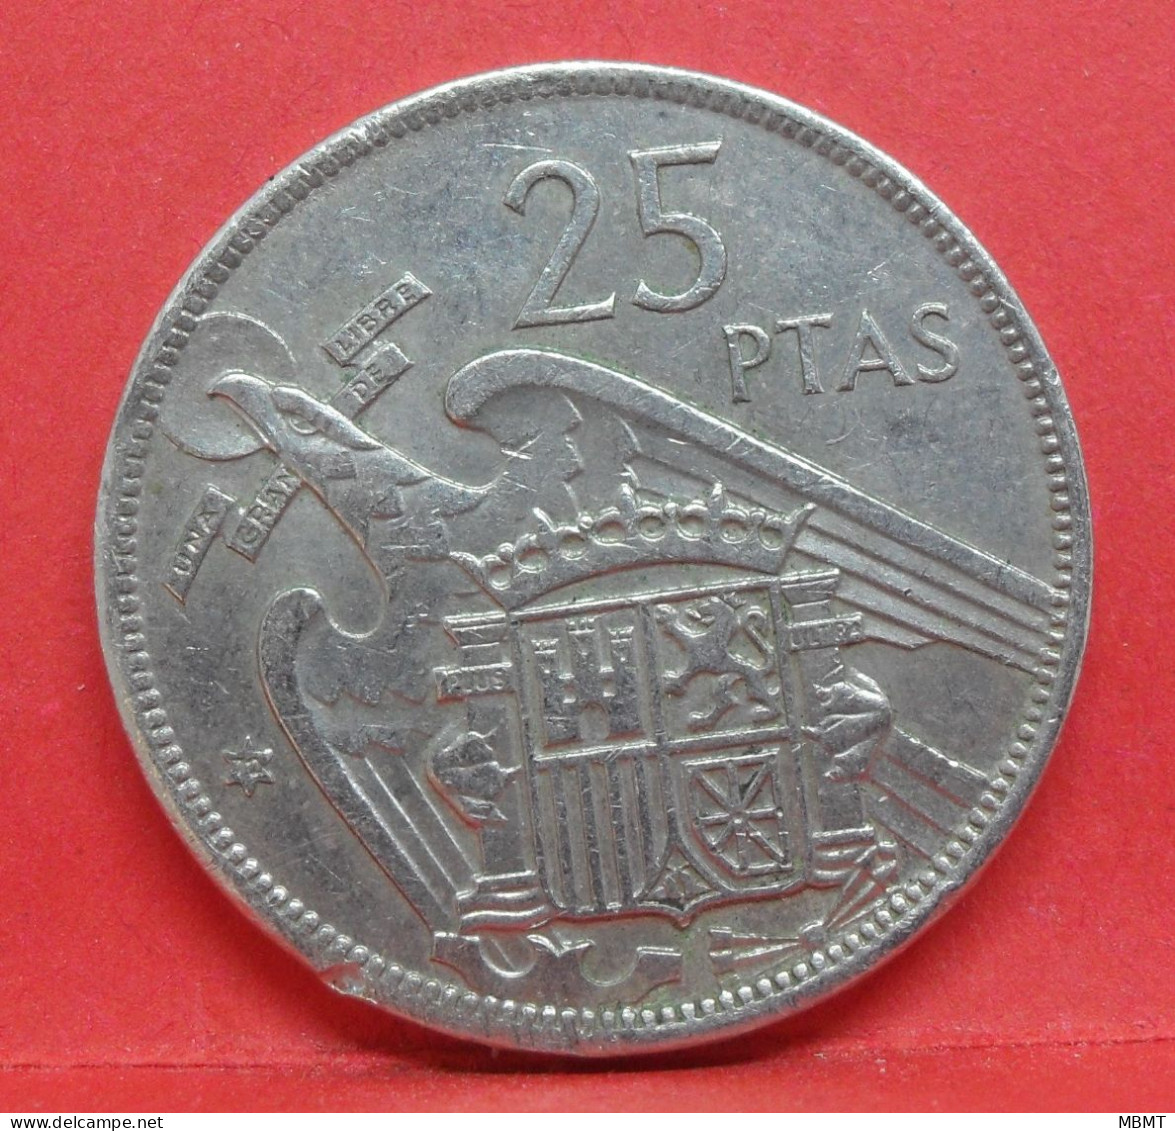 25 Pesetas 1957 étoile 72 - TTB - Pièce Monnaie Espagne - Article N°2443 - 25 Pesetas